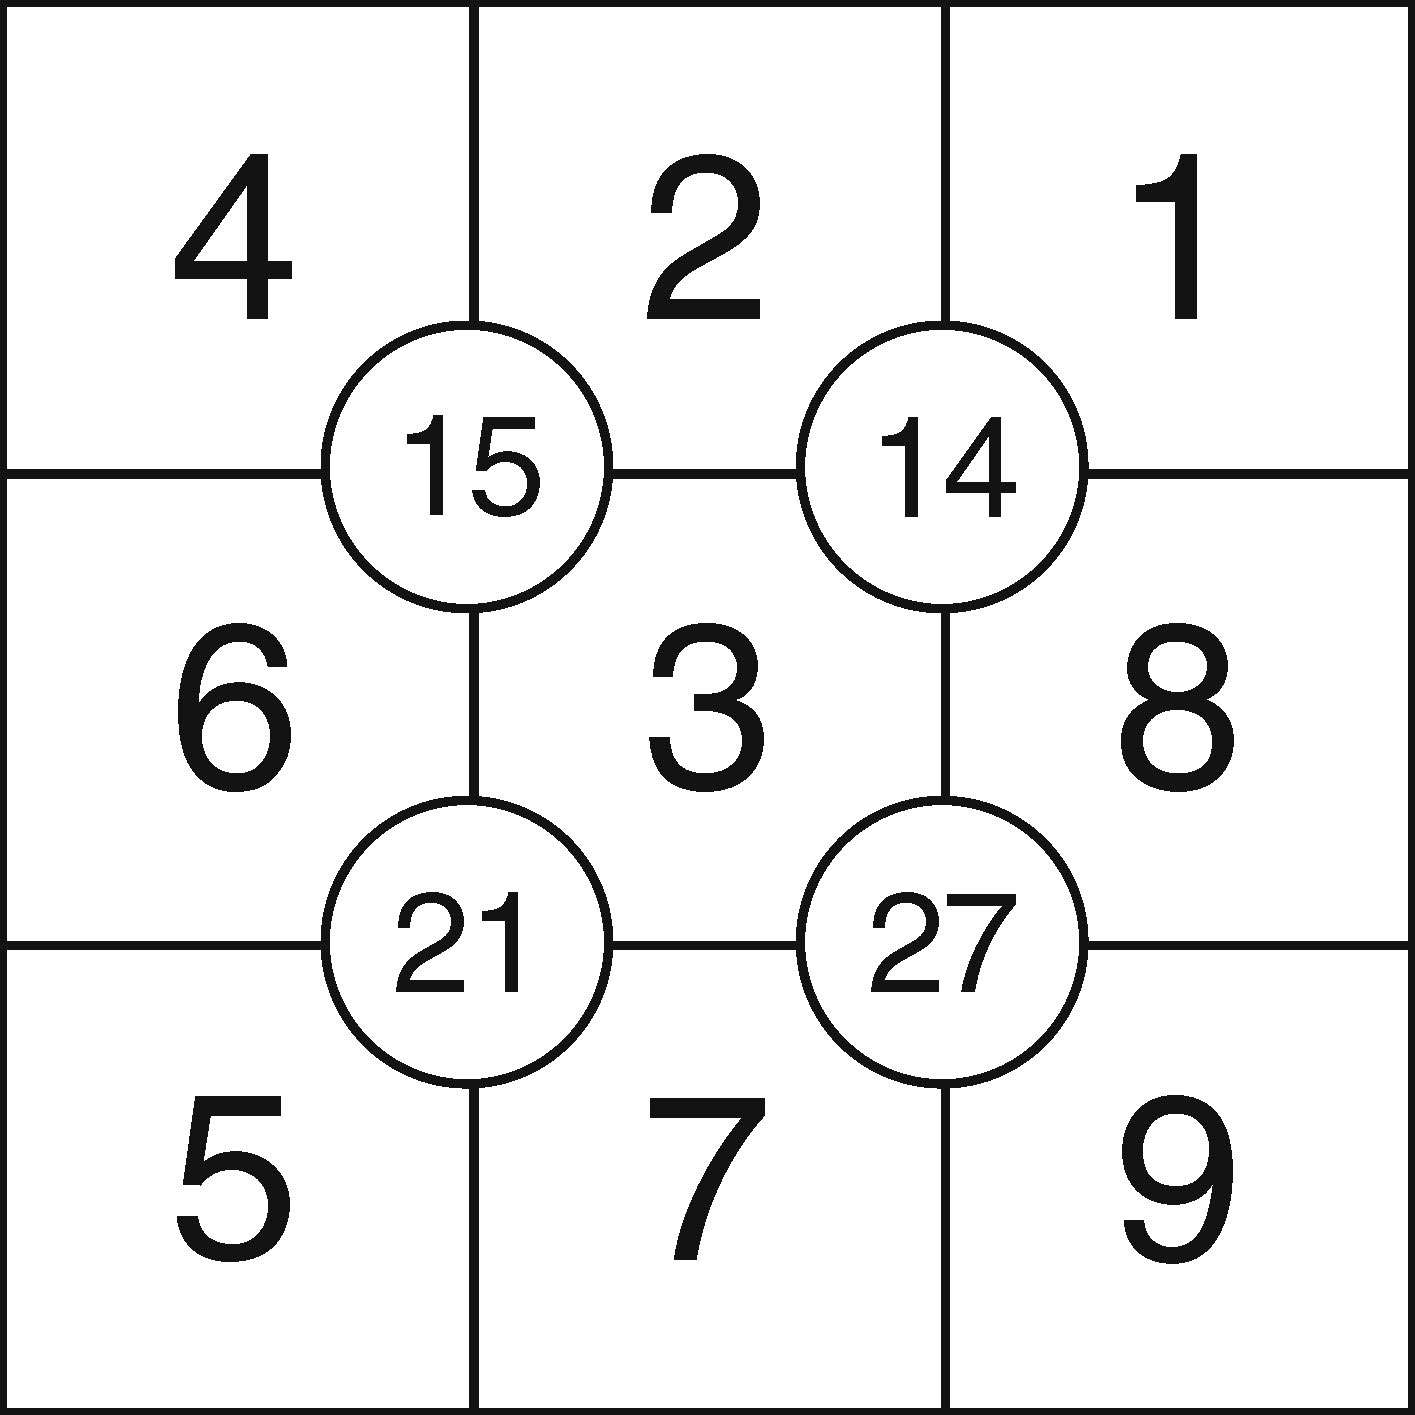 Sekuta solved example puzzle